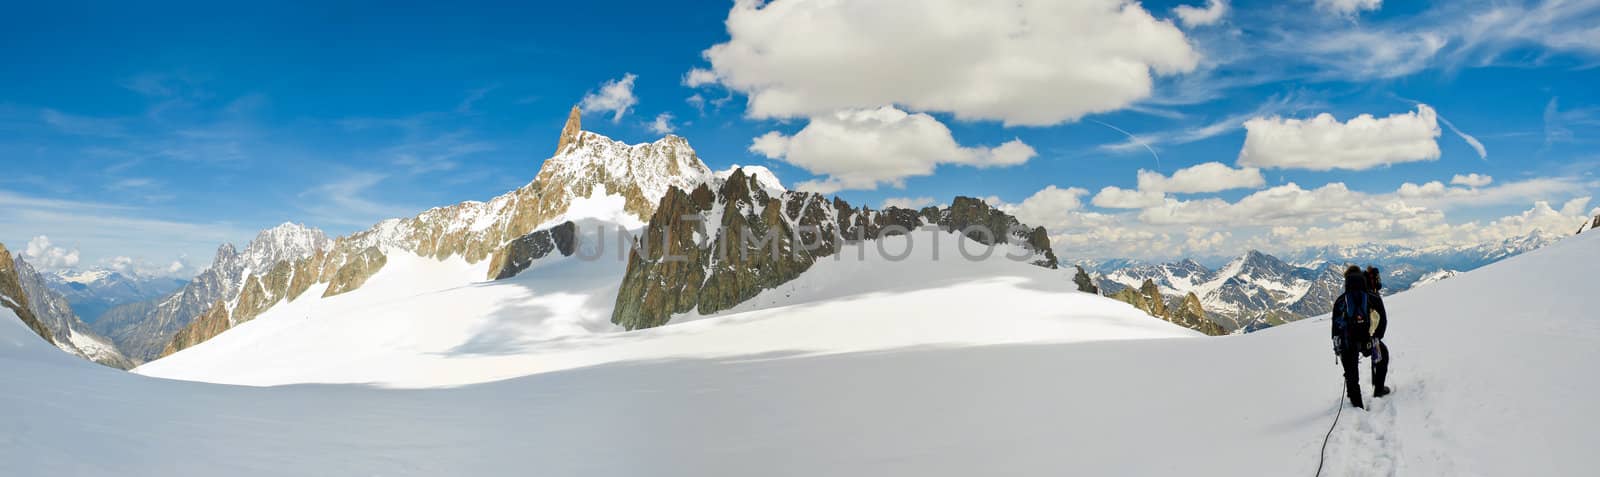 Mont Blanc Massif by vinciber